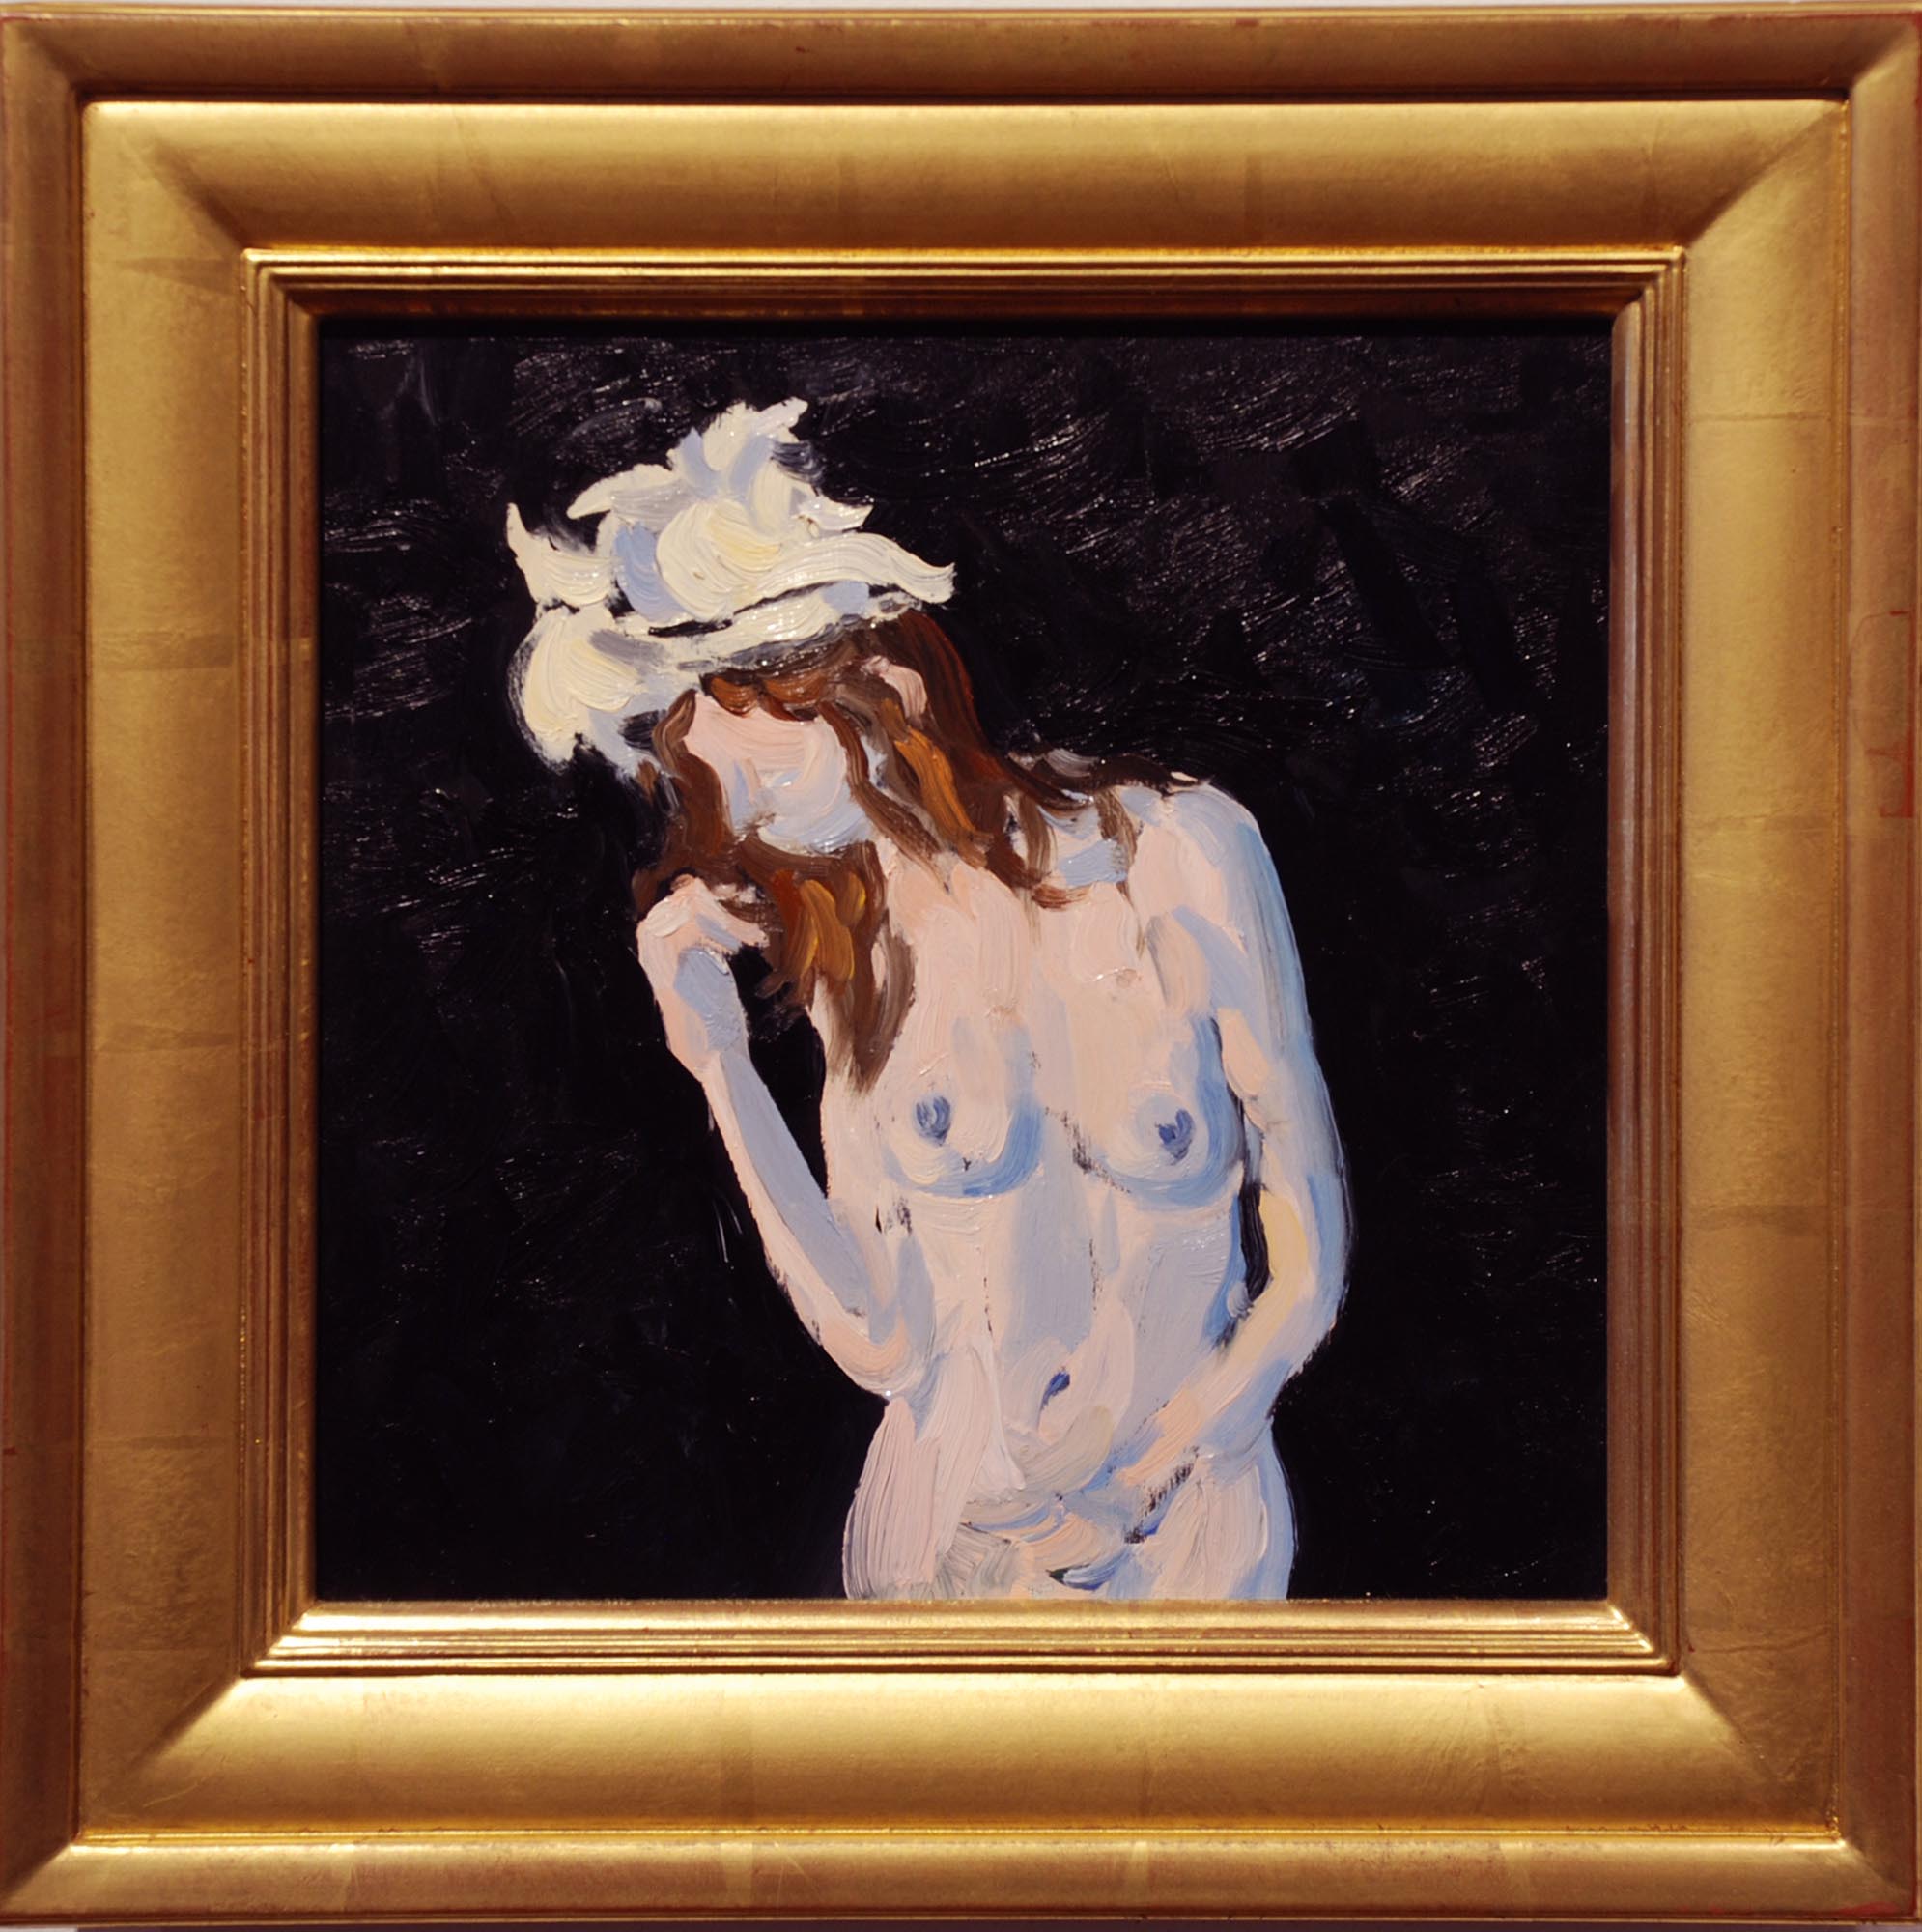 Keith Hamilton Nude with a Hat framed